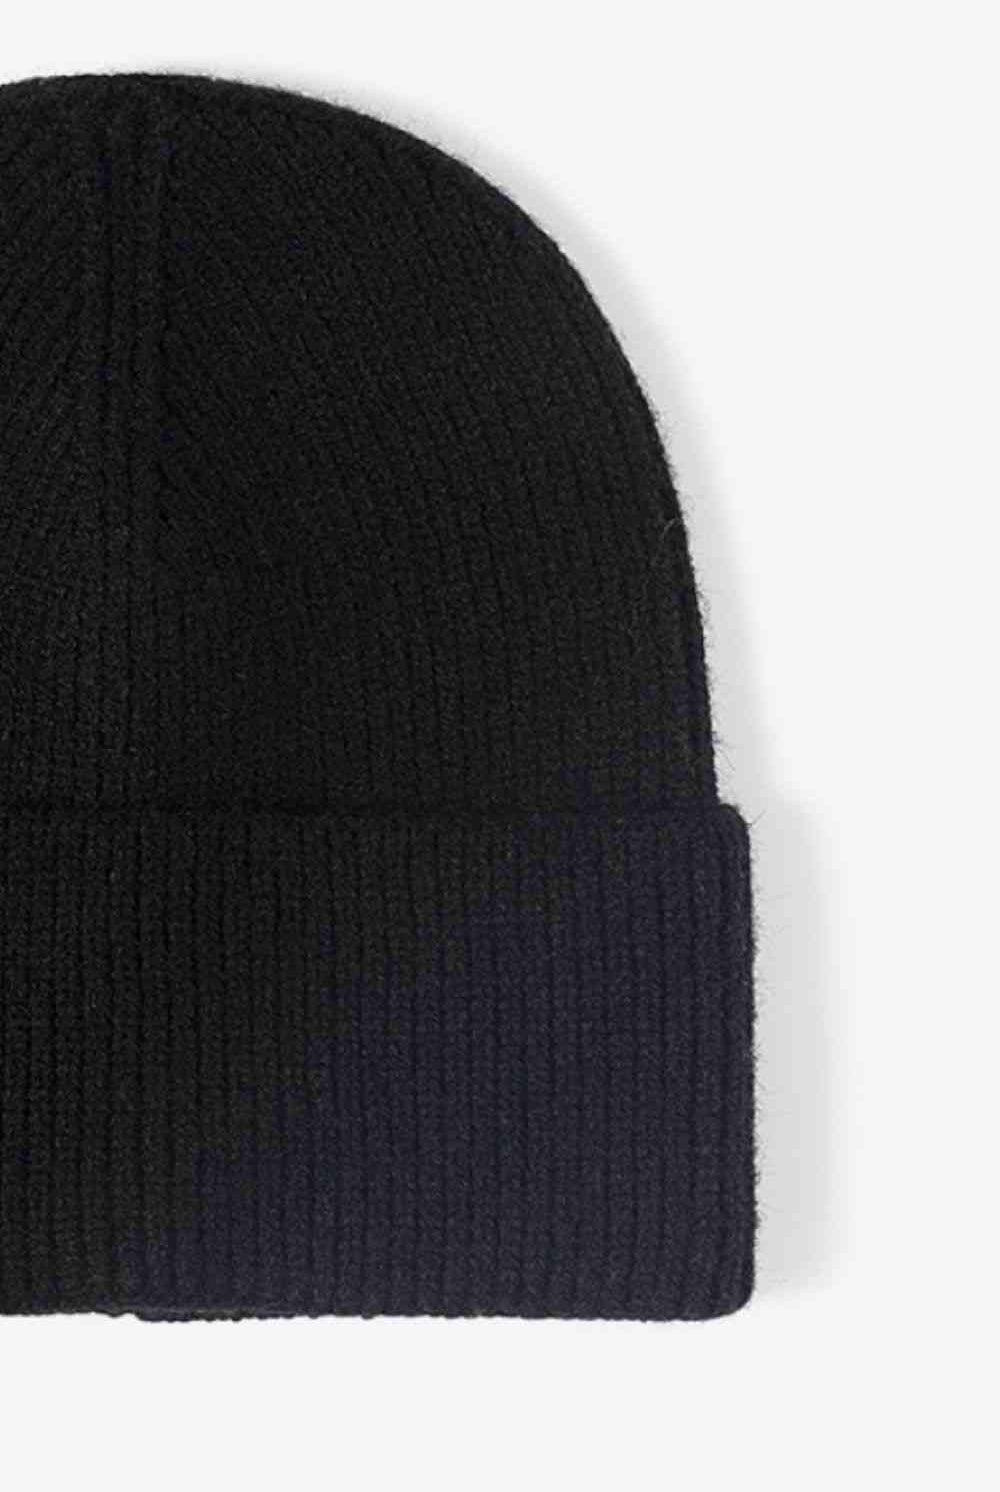 Black Warm In Chilly Days Knit Beanie Winter Accessories